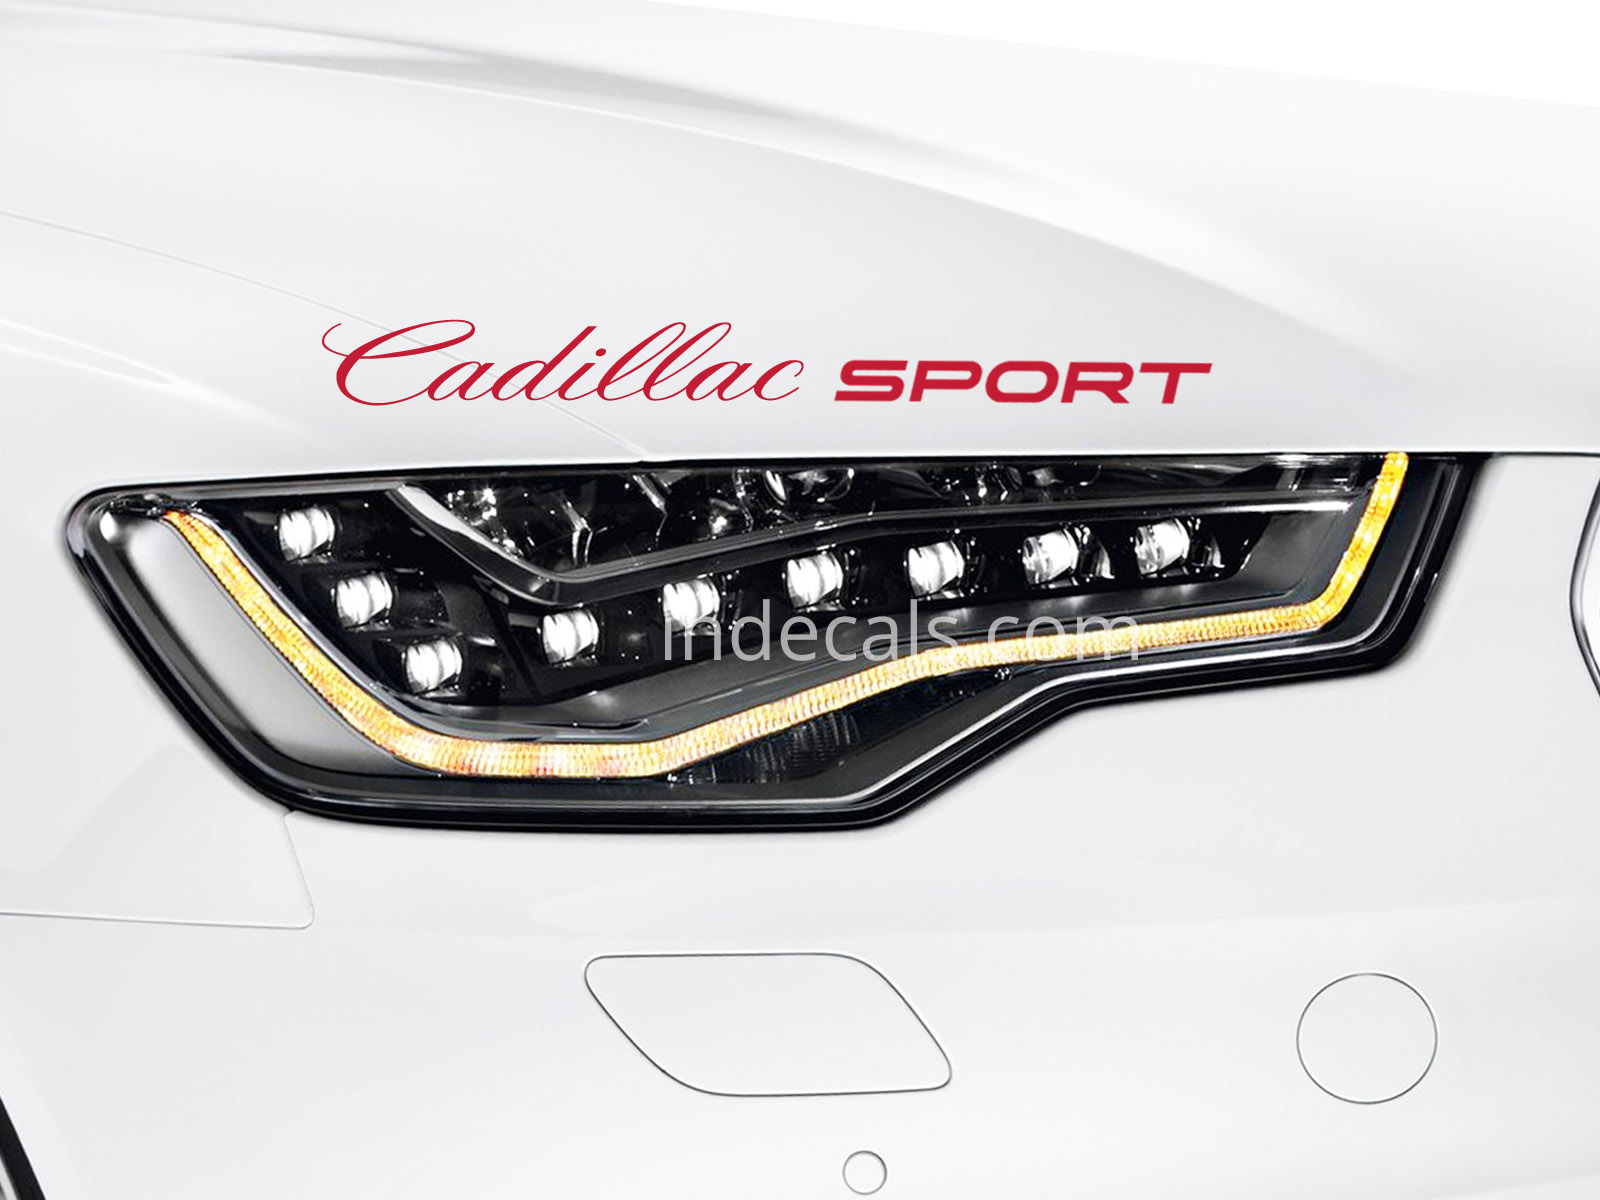 1 x Cadillac Sport Sticker - Red